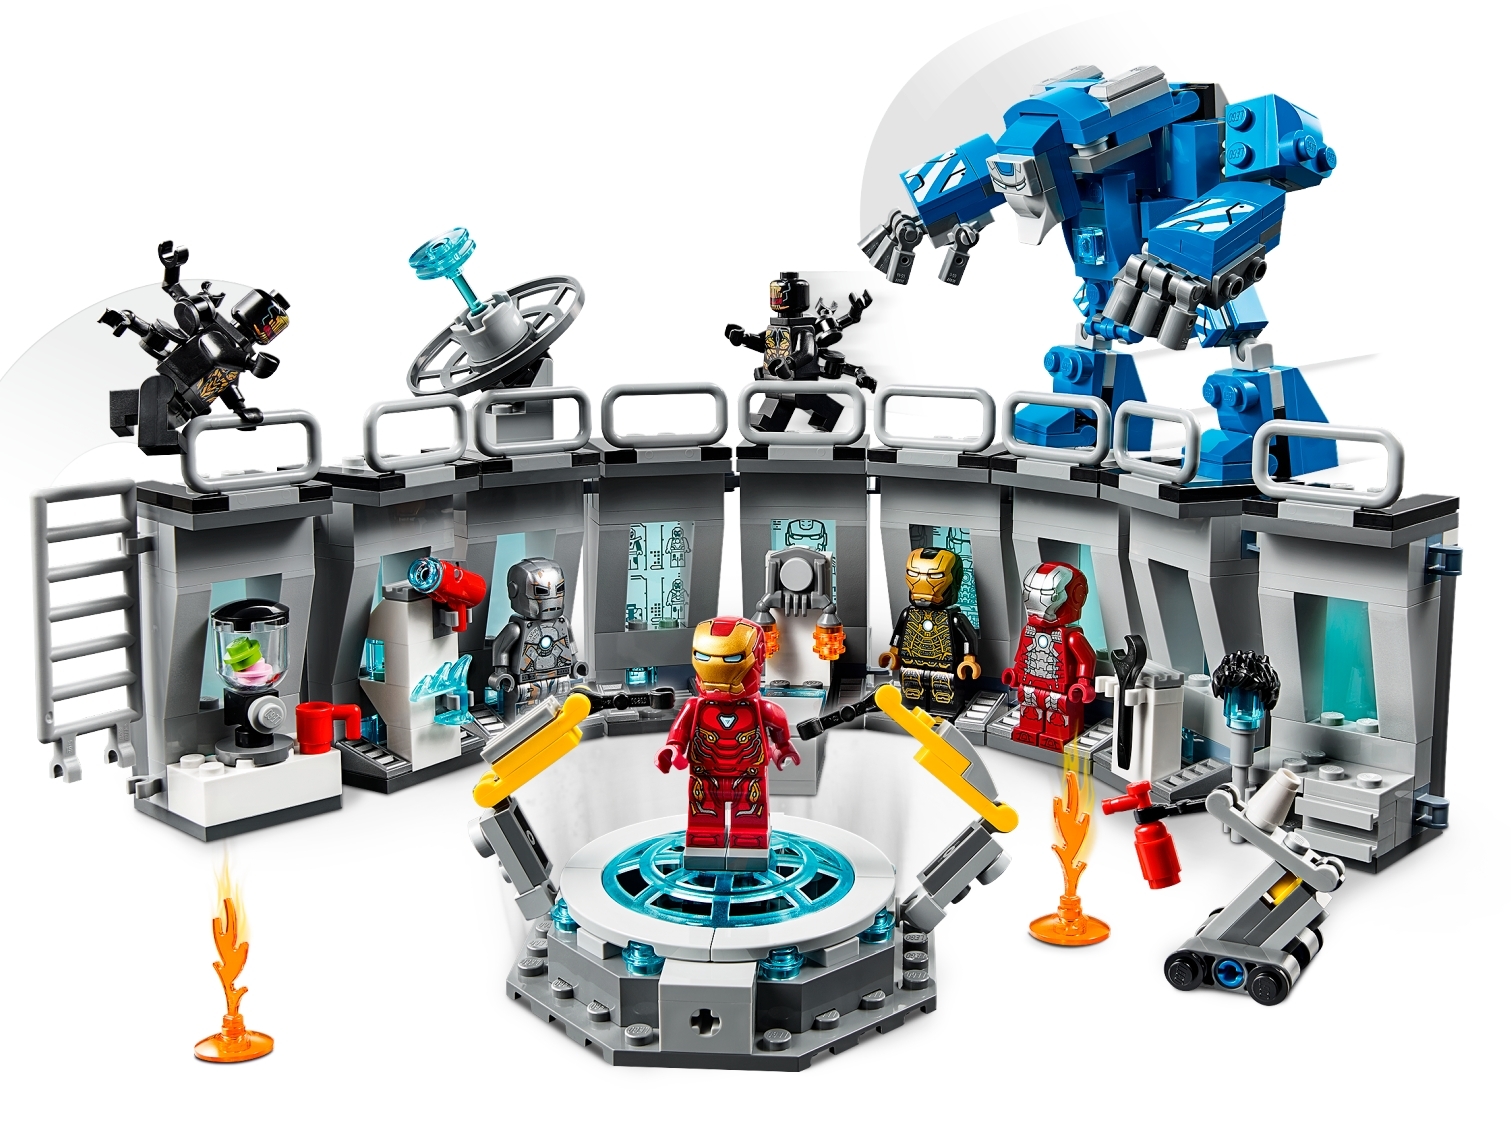 Lego® Super Heroes™ Figur Iron Man Mark 1 sh565 aus 76125 brandneu 